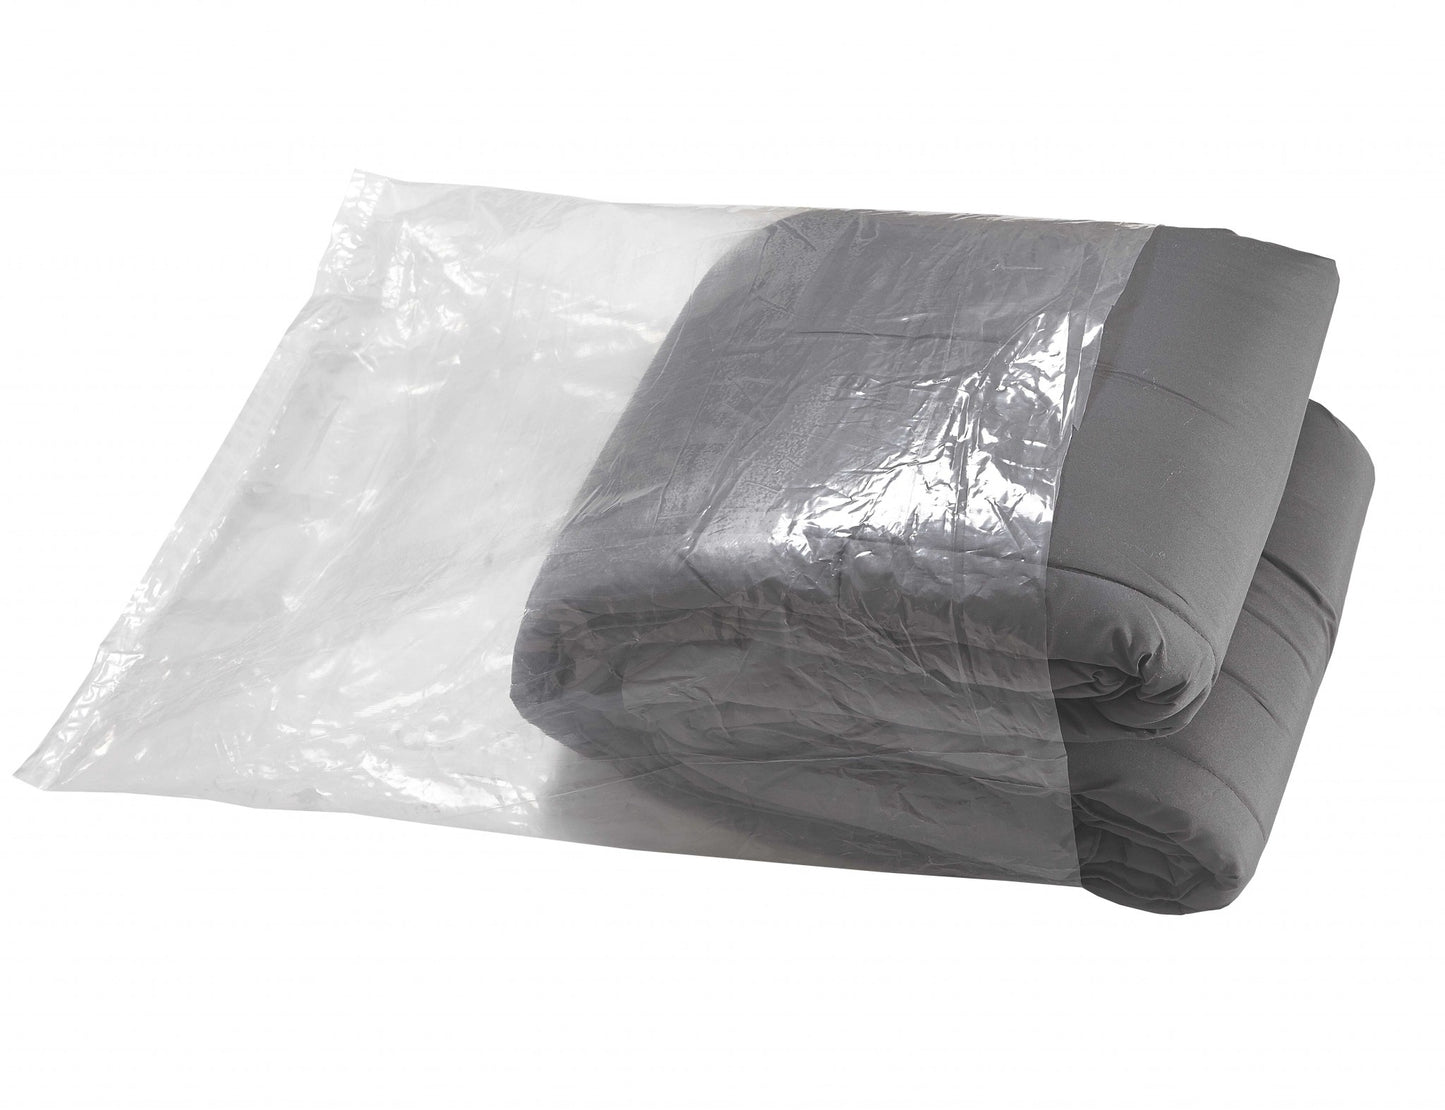 Dark Gray California King Polyester Thread Count Down Alternative Comforter